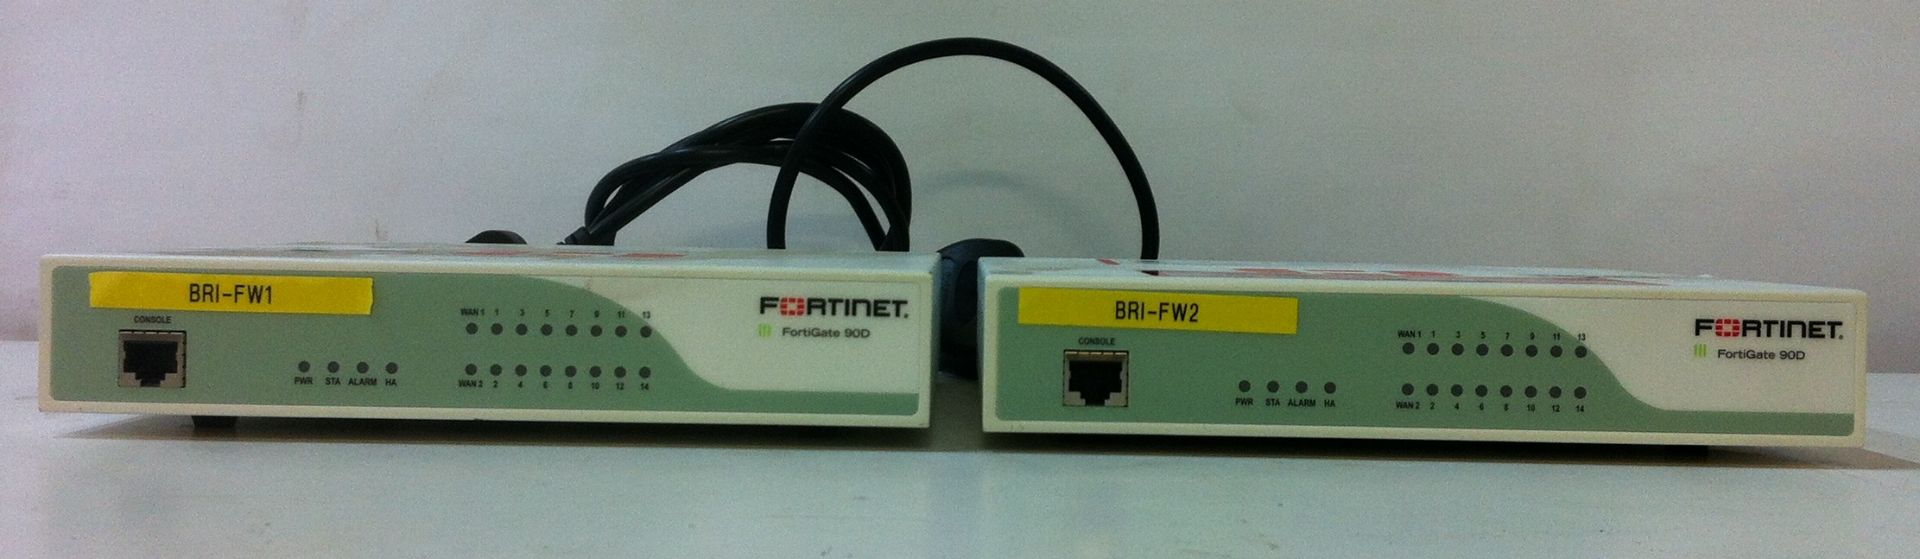 2 x Fortinet Fortigate - 90D Firewall Solution